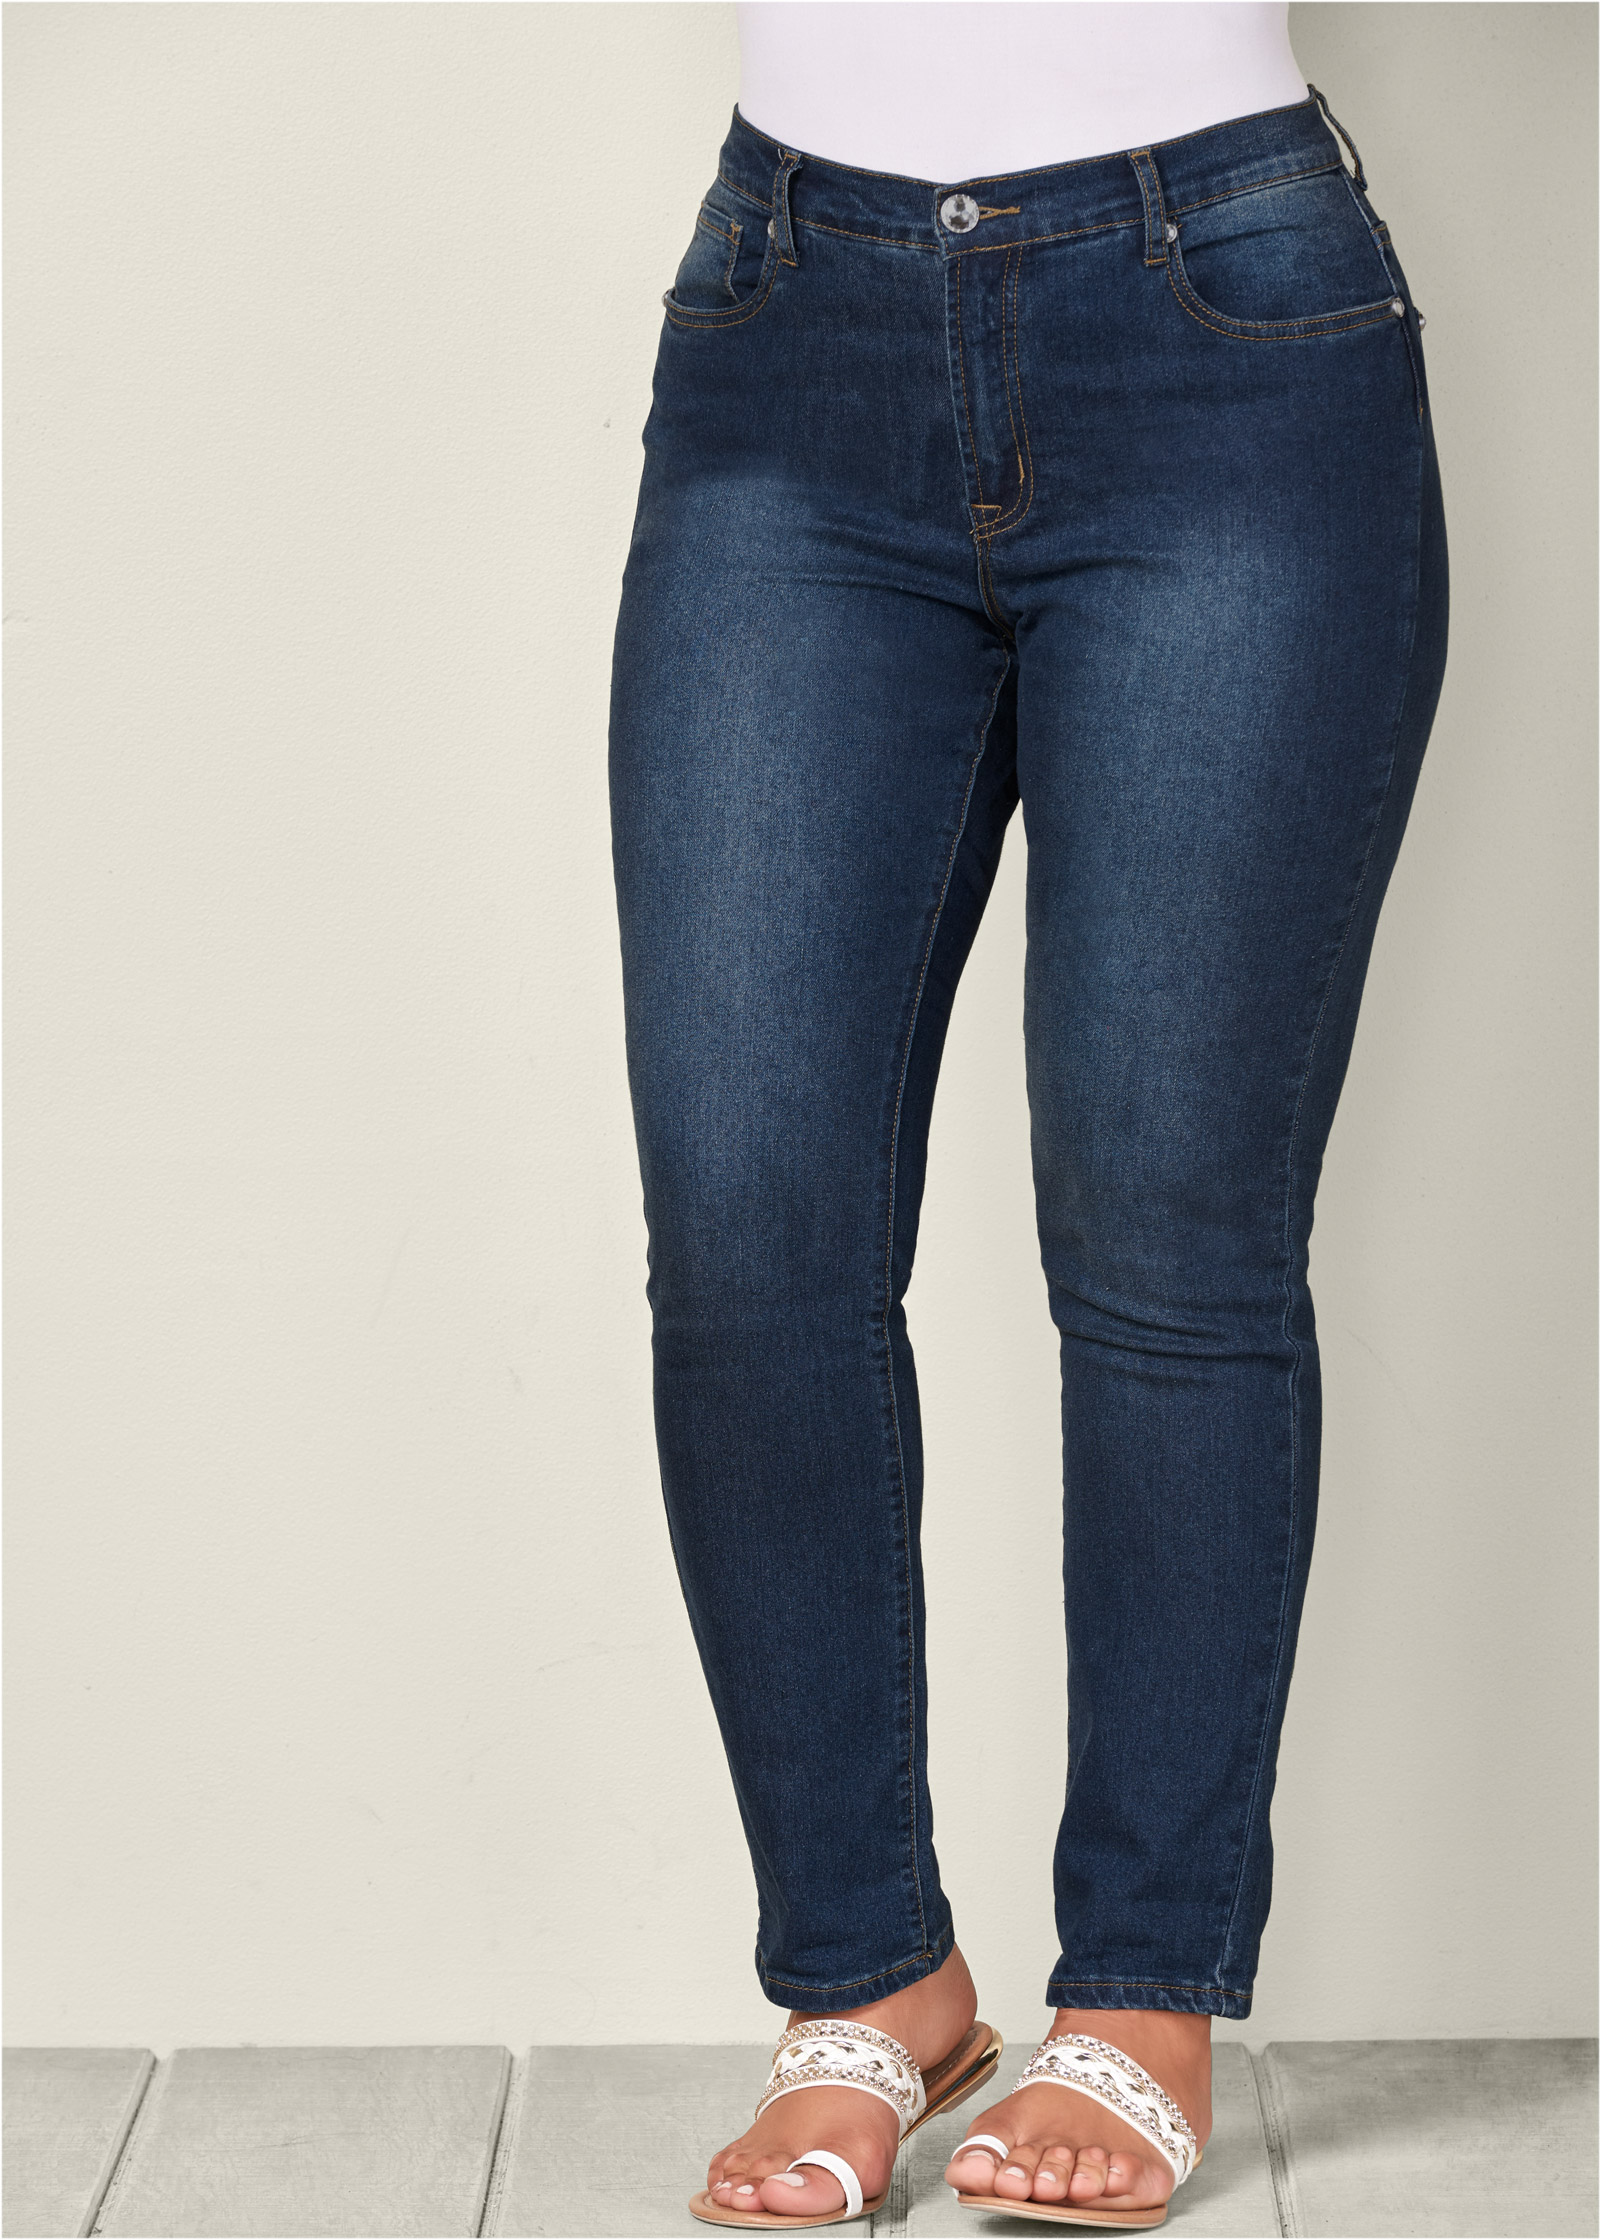 venus colored jeans